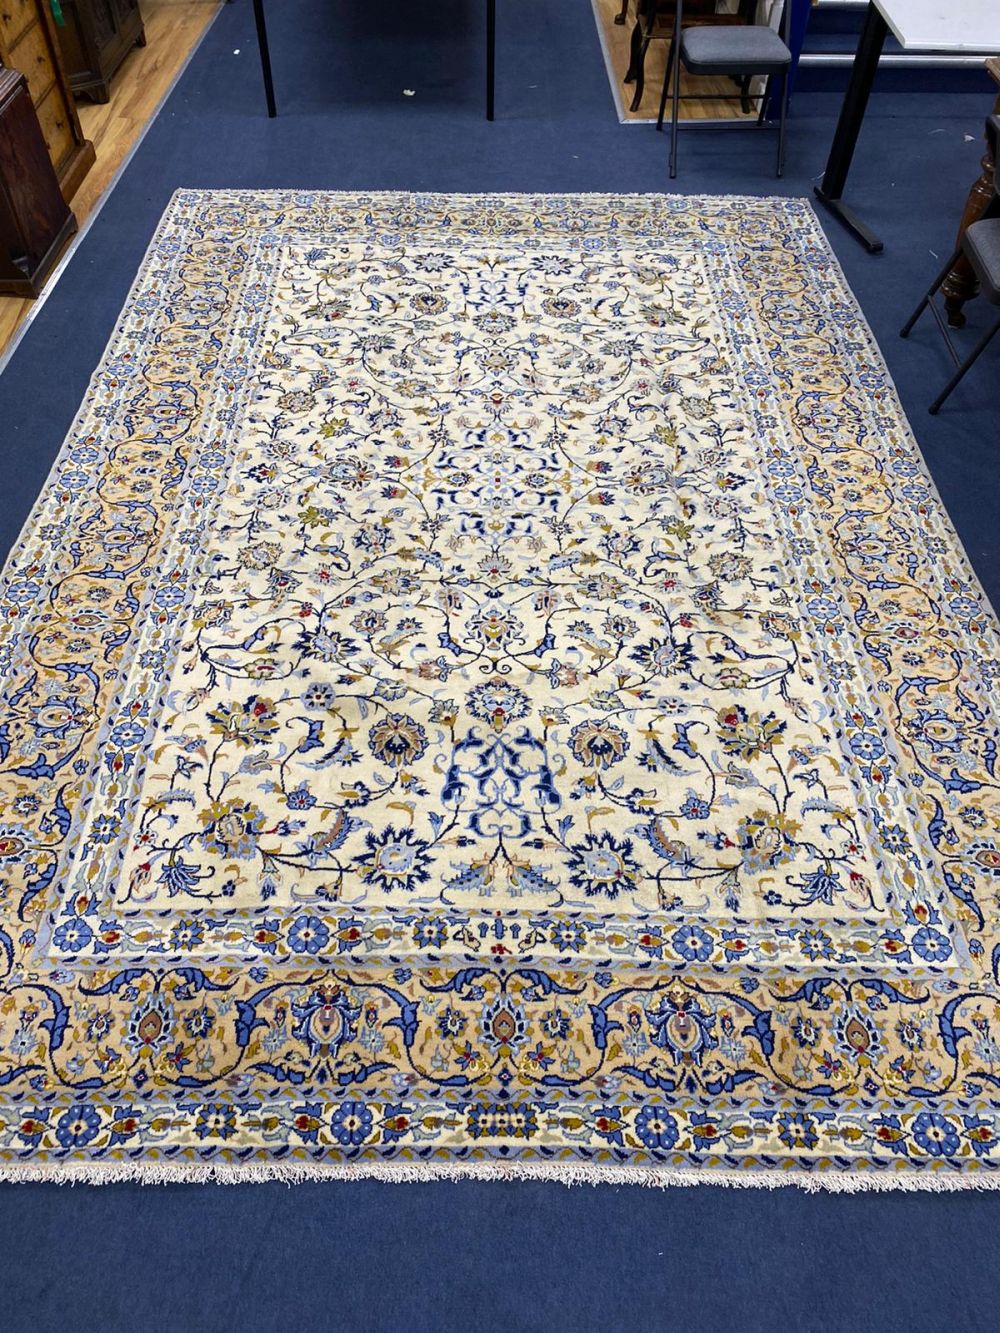 A Kashan carpet 360 x 250cm